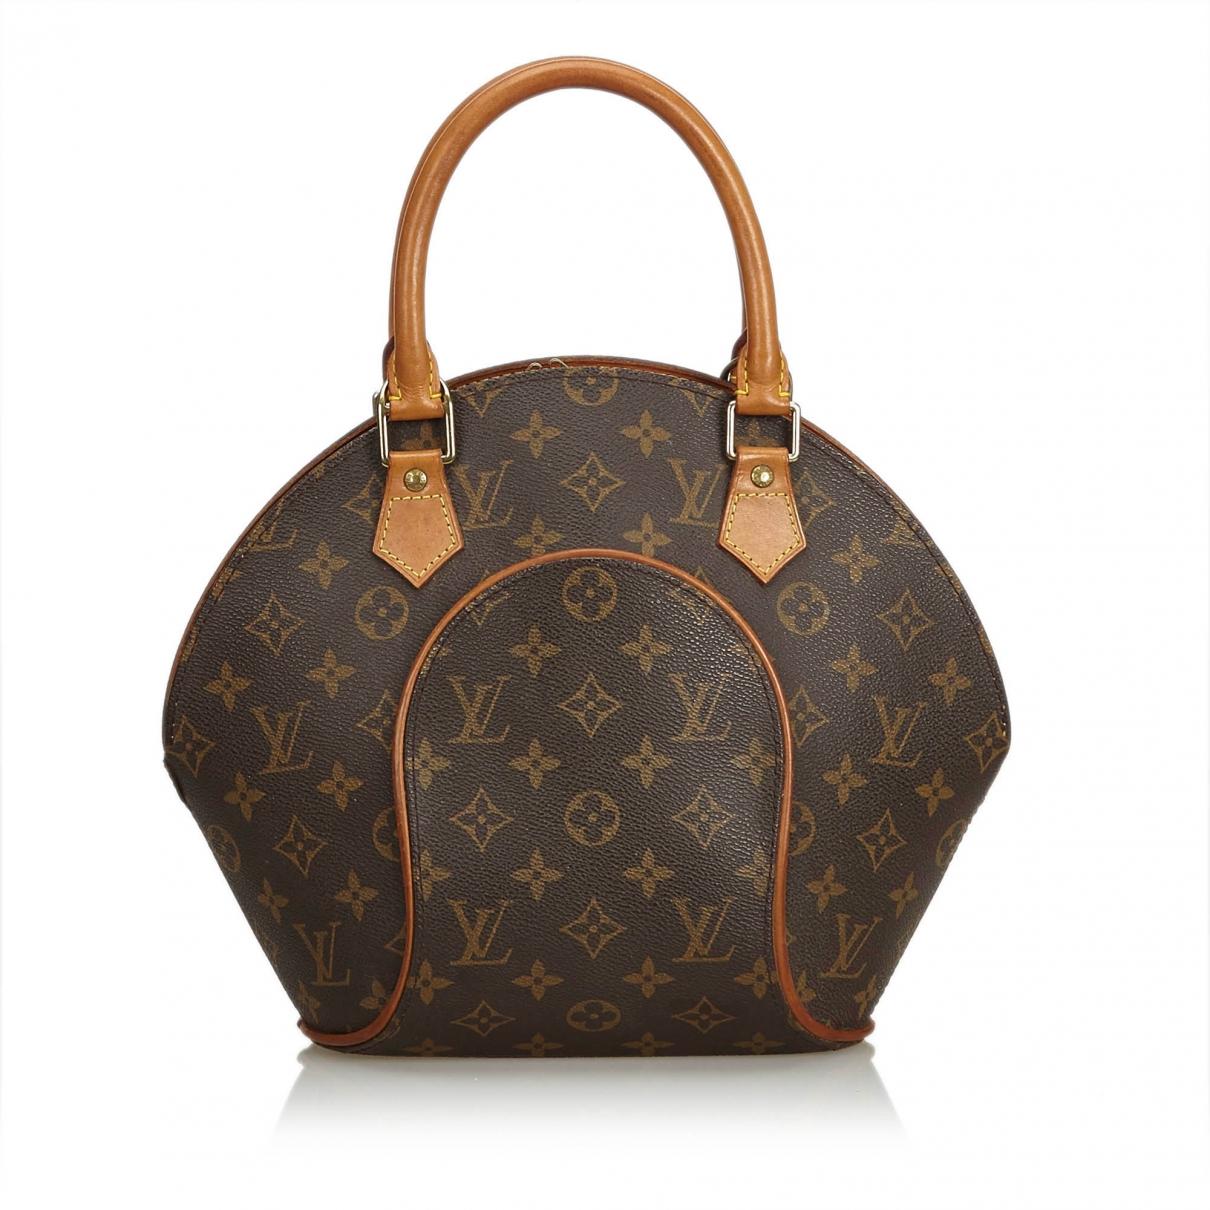 Vintage Louis Vuittons Handbag Keweenaw Bay Indian Community 6813